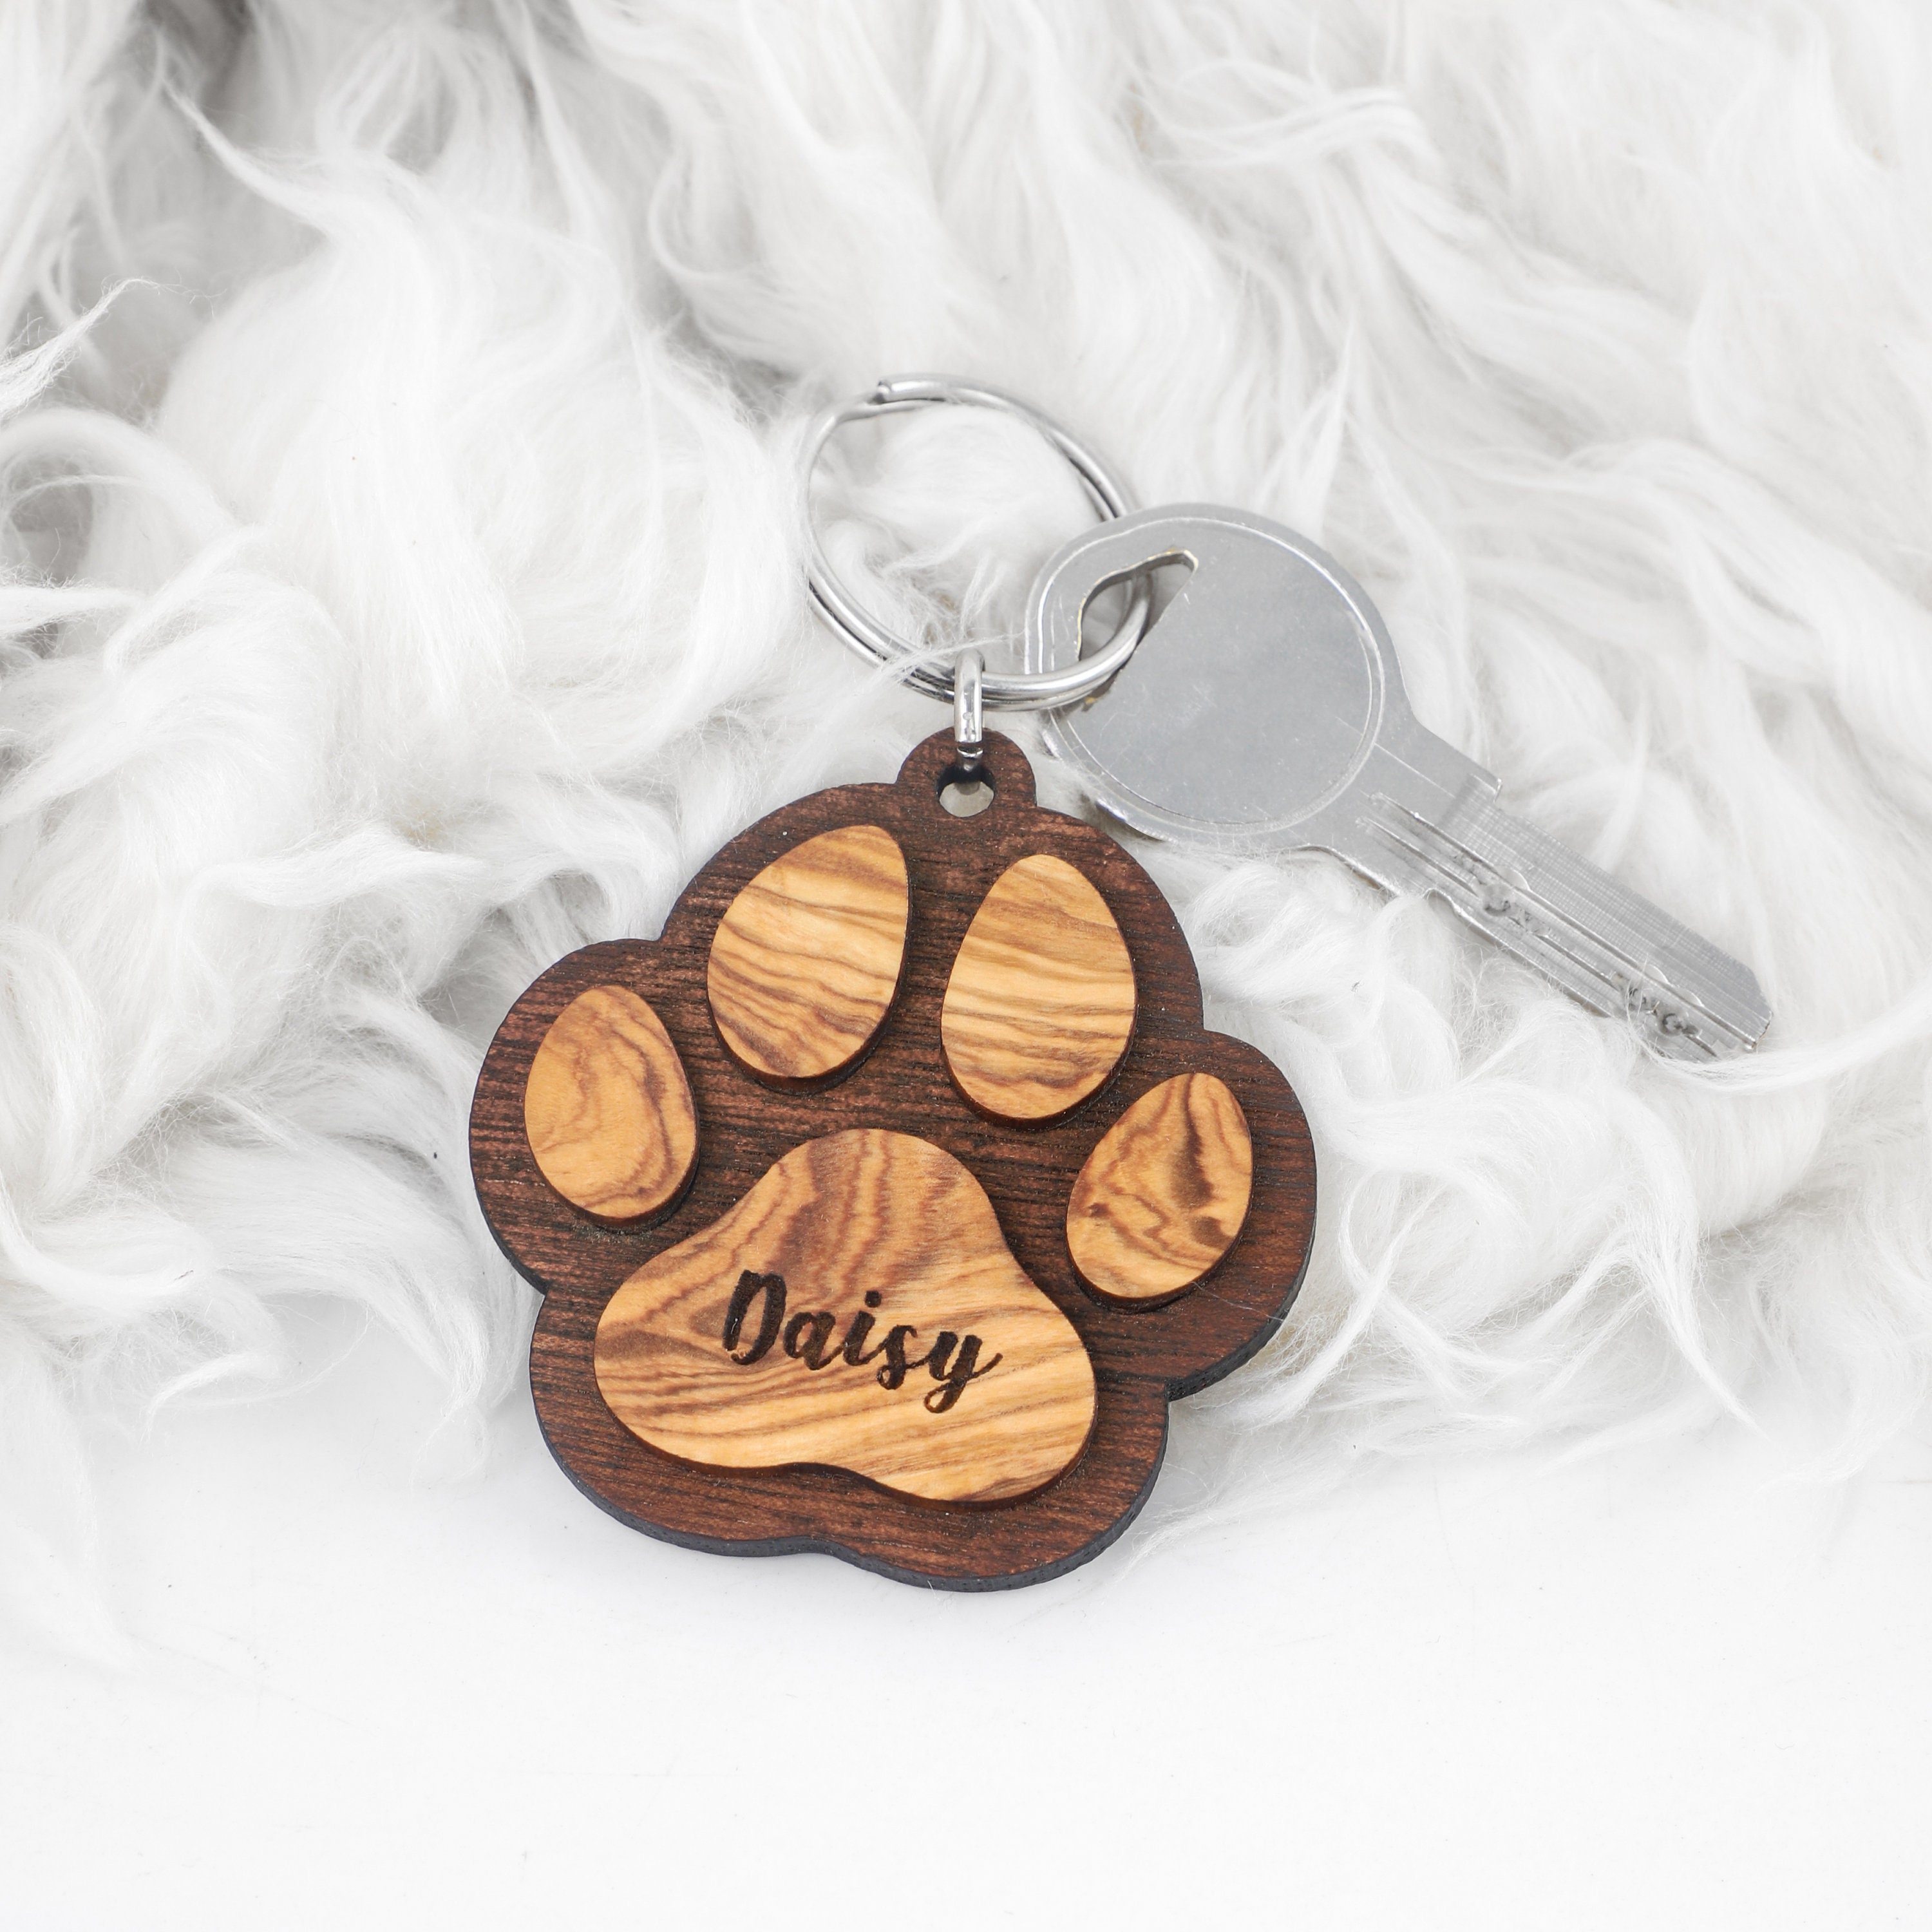 Paw Print Keychain - Dog Paw - Cat Paw Carved Wood Key Ring - Paw Print Wooden Engraved Charm - Animal Paw Print Charm